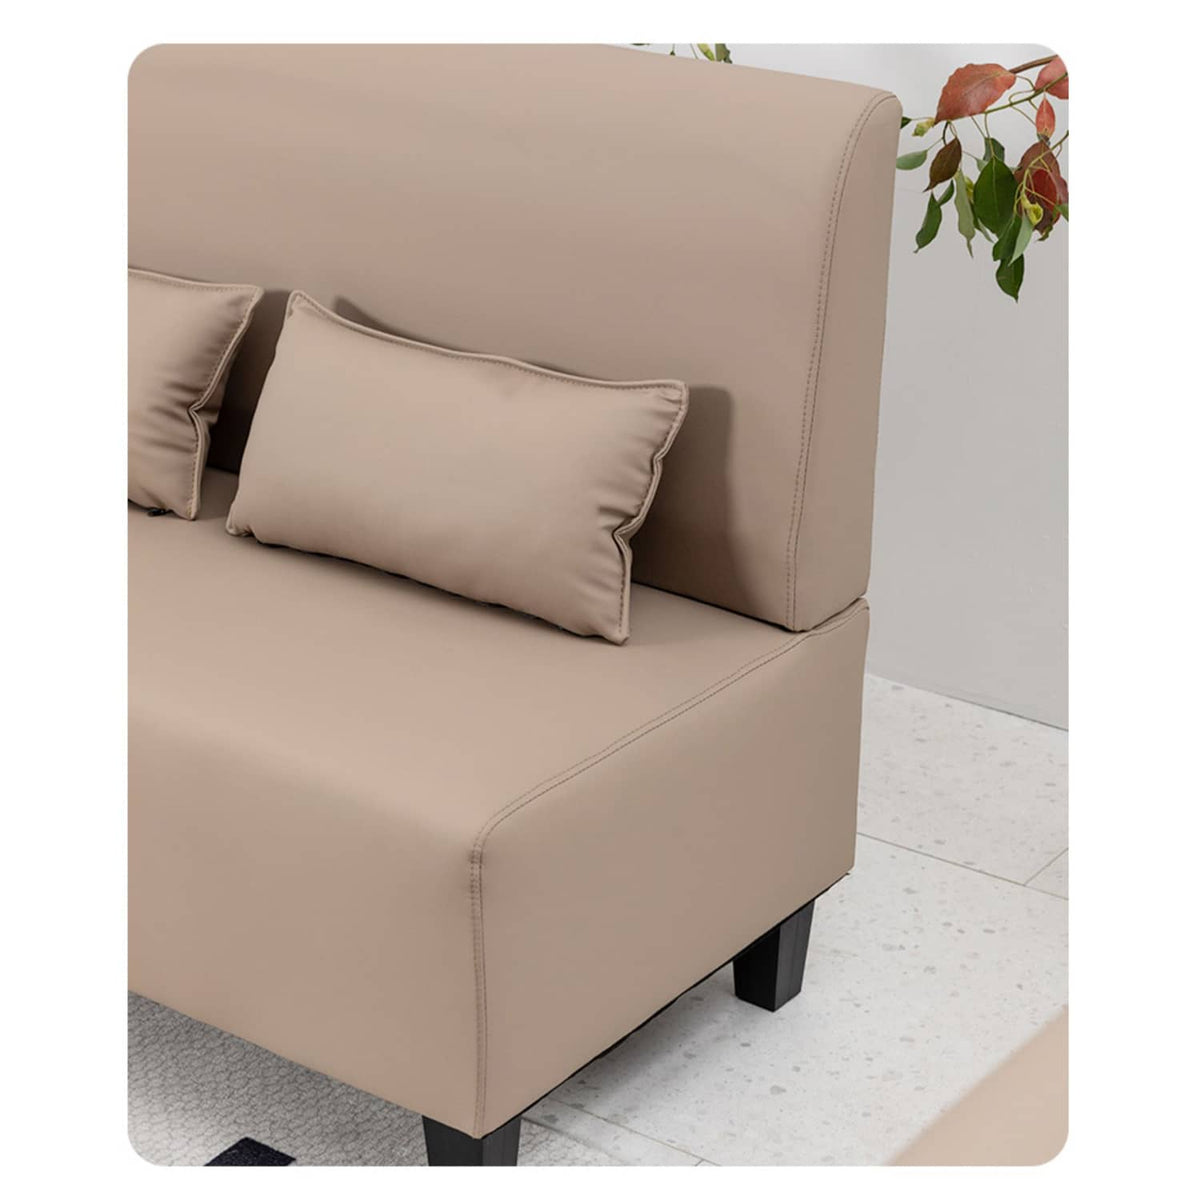 Modern Techno Fabric Sofa in Dark Blue, Light Gray, Khaki, and Orange with Wood Accents - Durable Nylon Upholstery qm-14